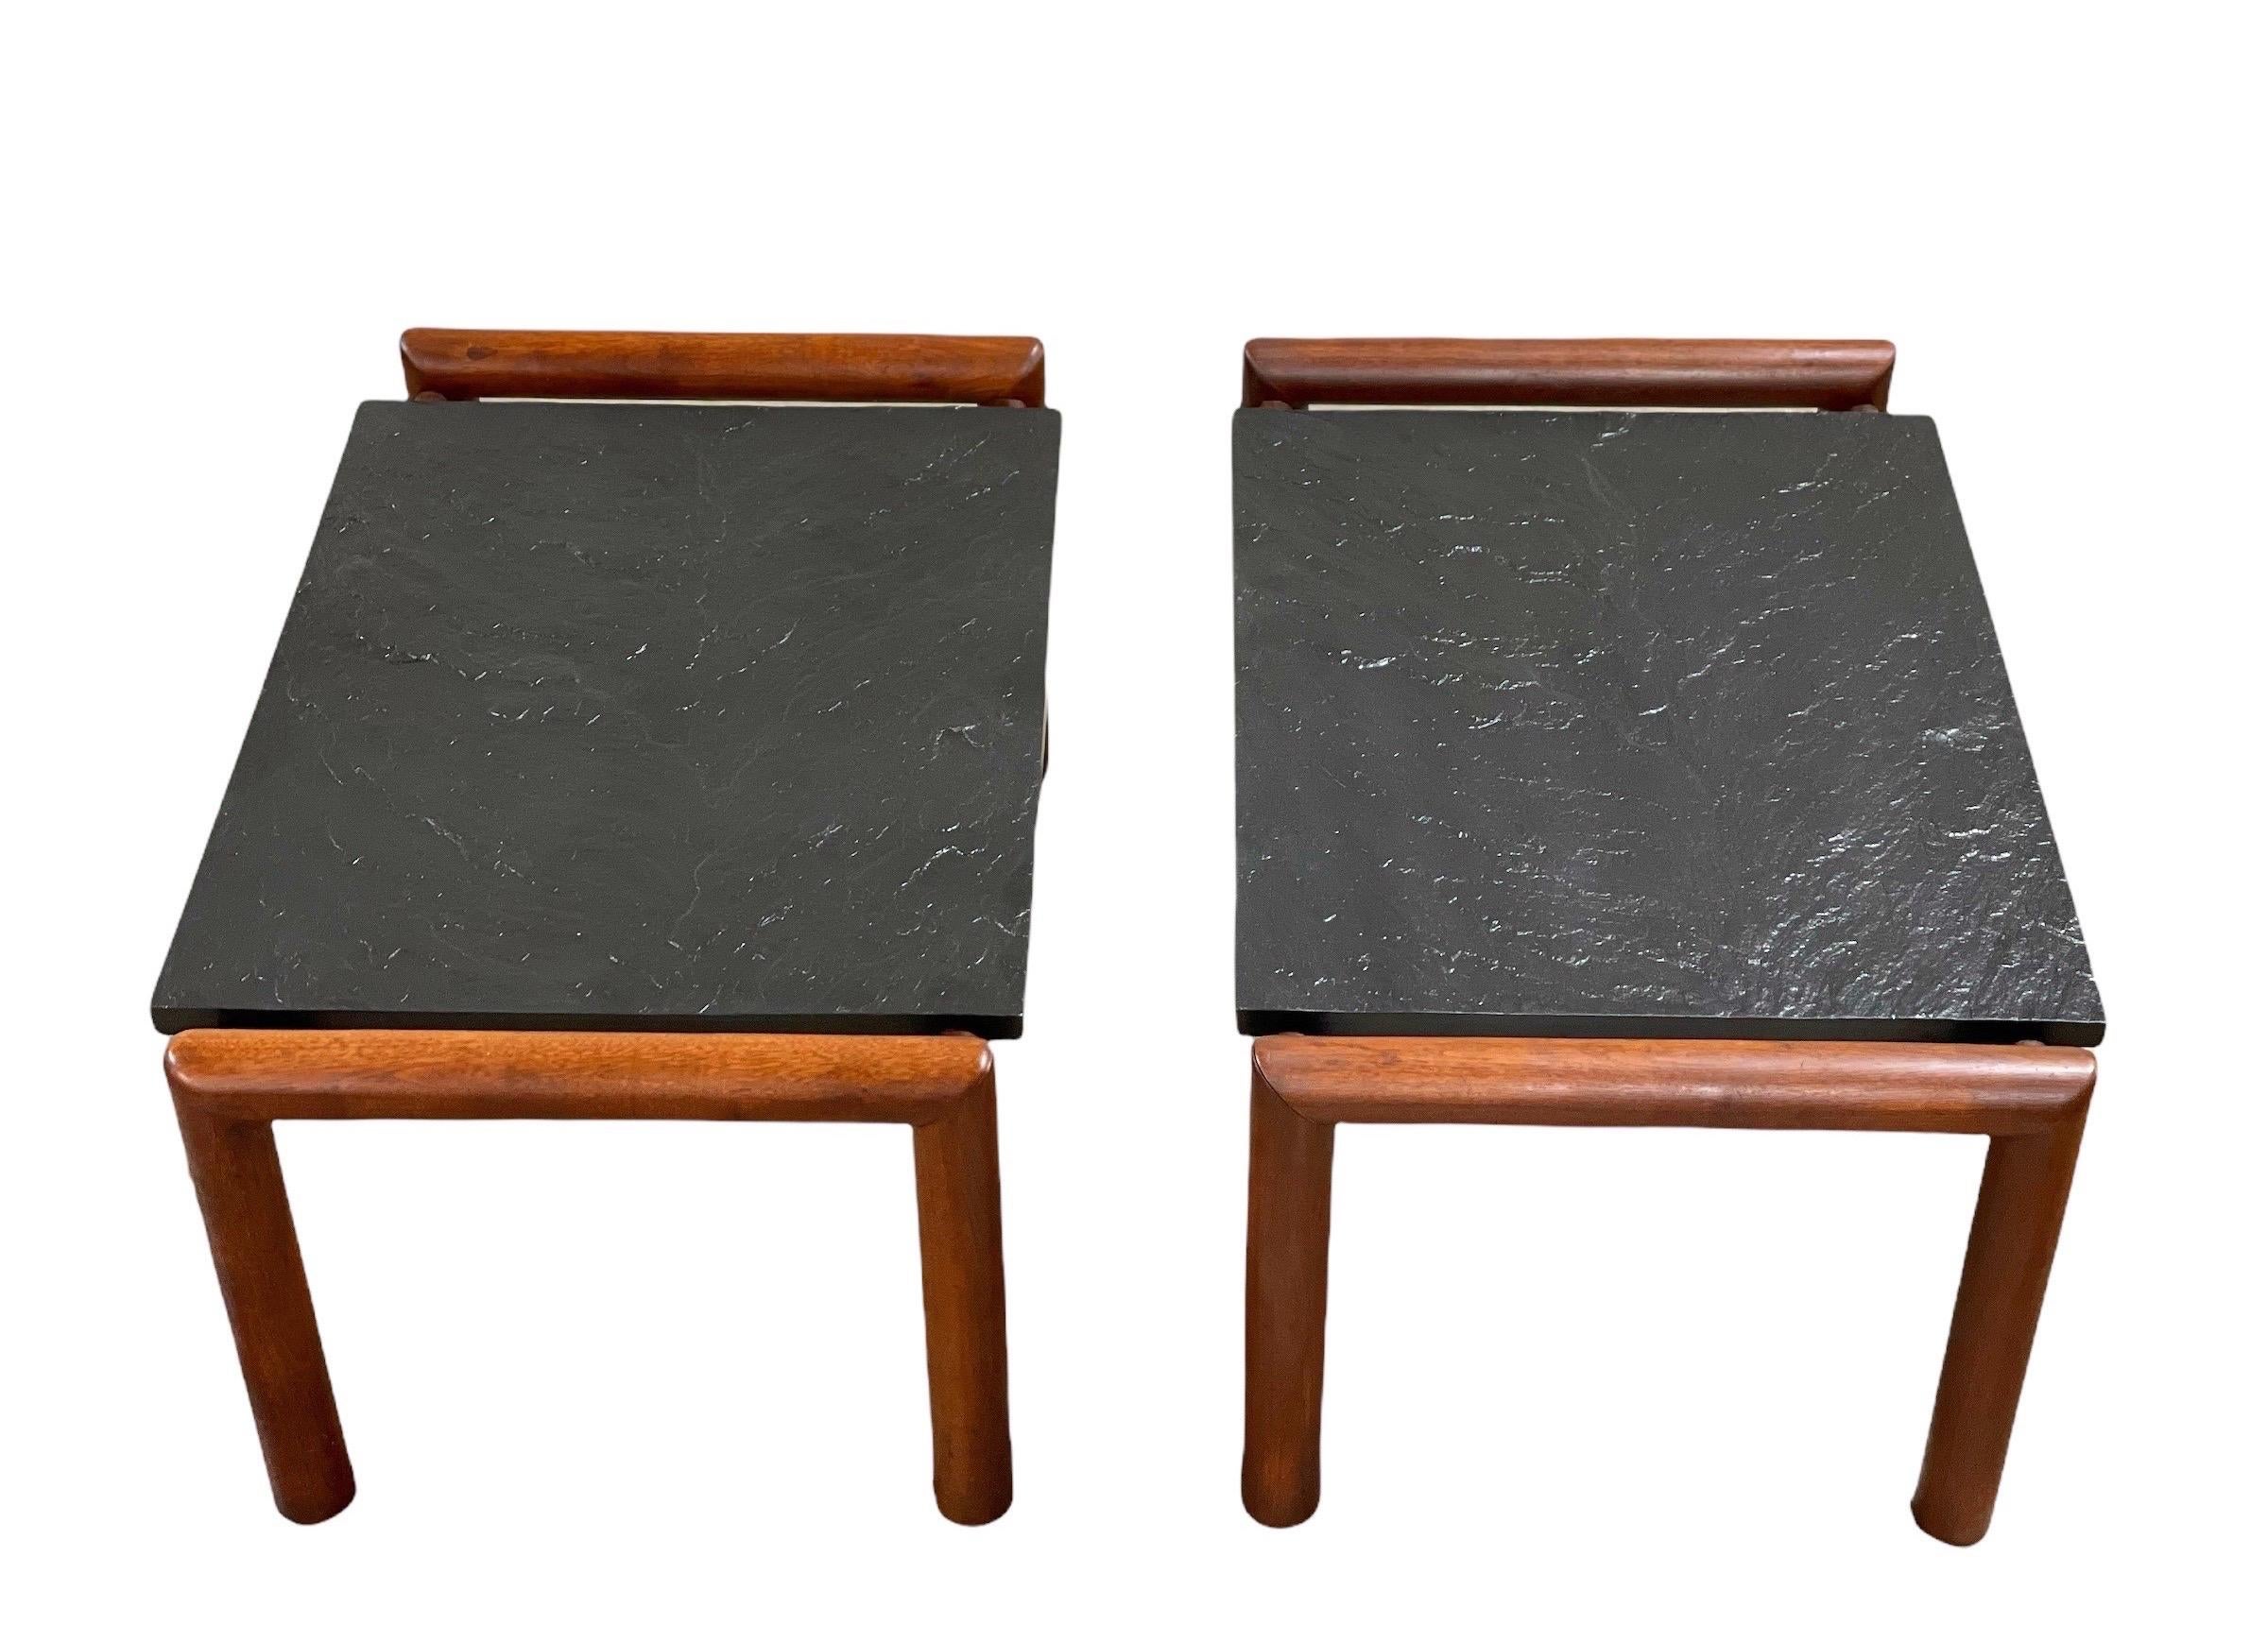 Adrian Pearsall Midcentury Organic Modern Side Tables - Walnut + Slate - a Pair 4